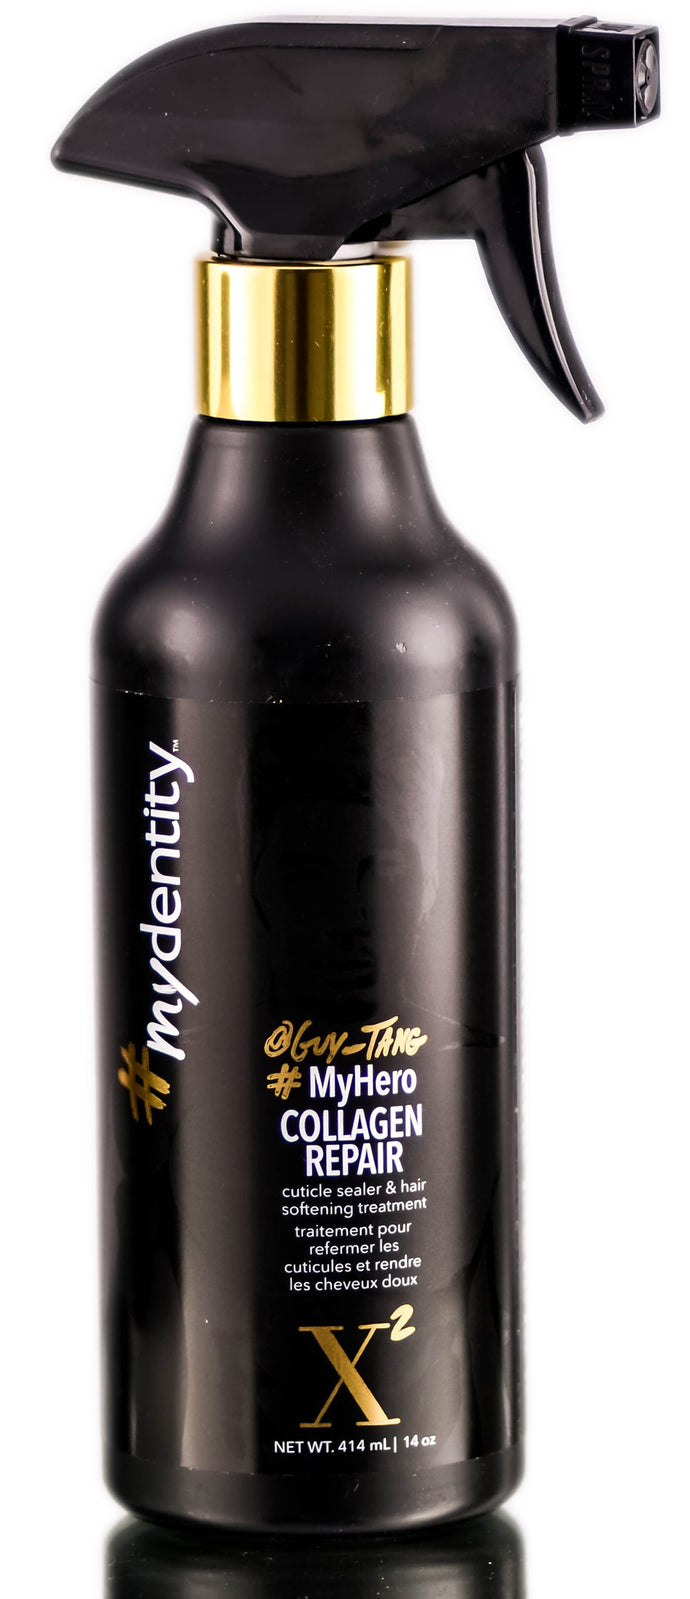 Mydentity #MyHero Collagen Repair X 2 - 14oz